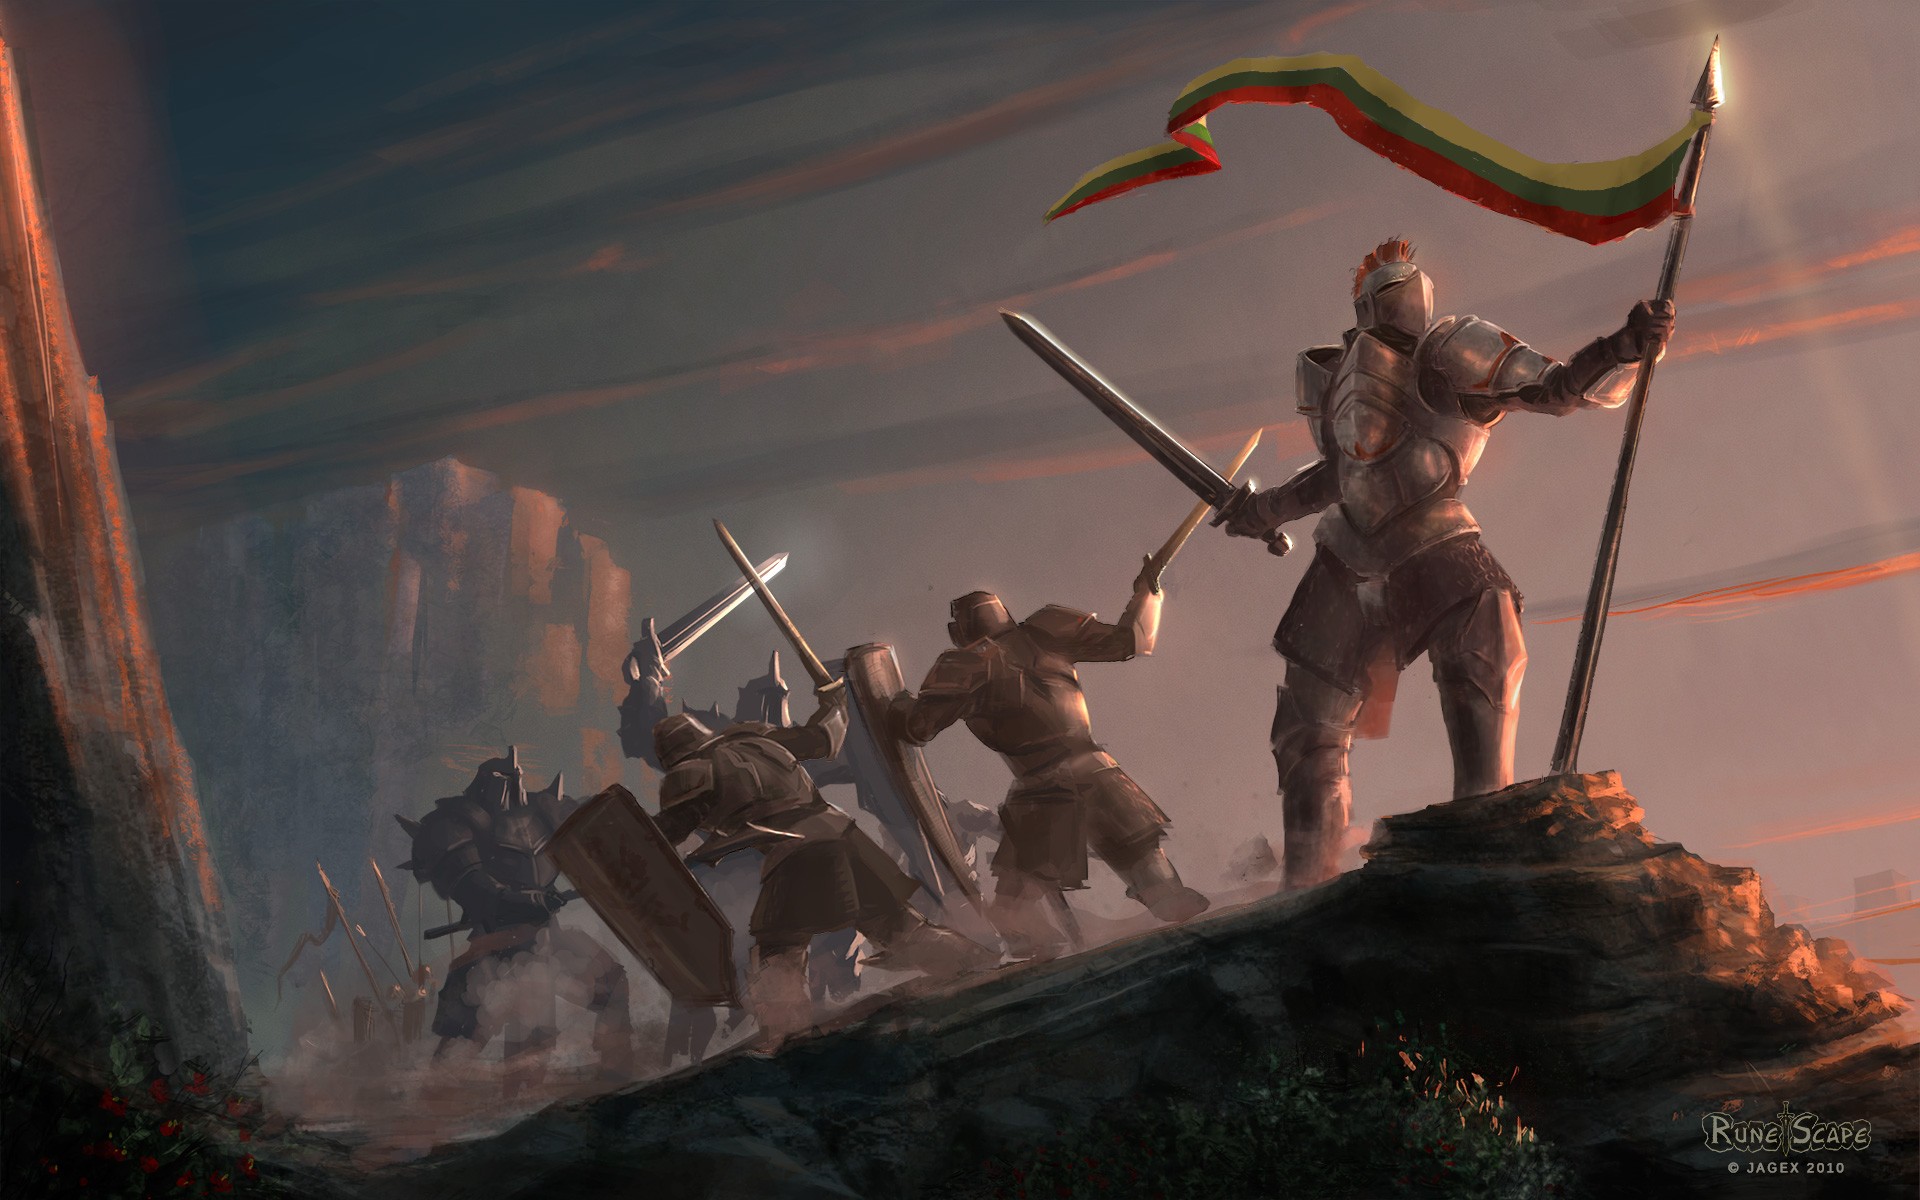 Runescape Flag Armor Knight Artwork Warrior Battle Fantasy Art Video Games Lithuania 1920x1200